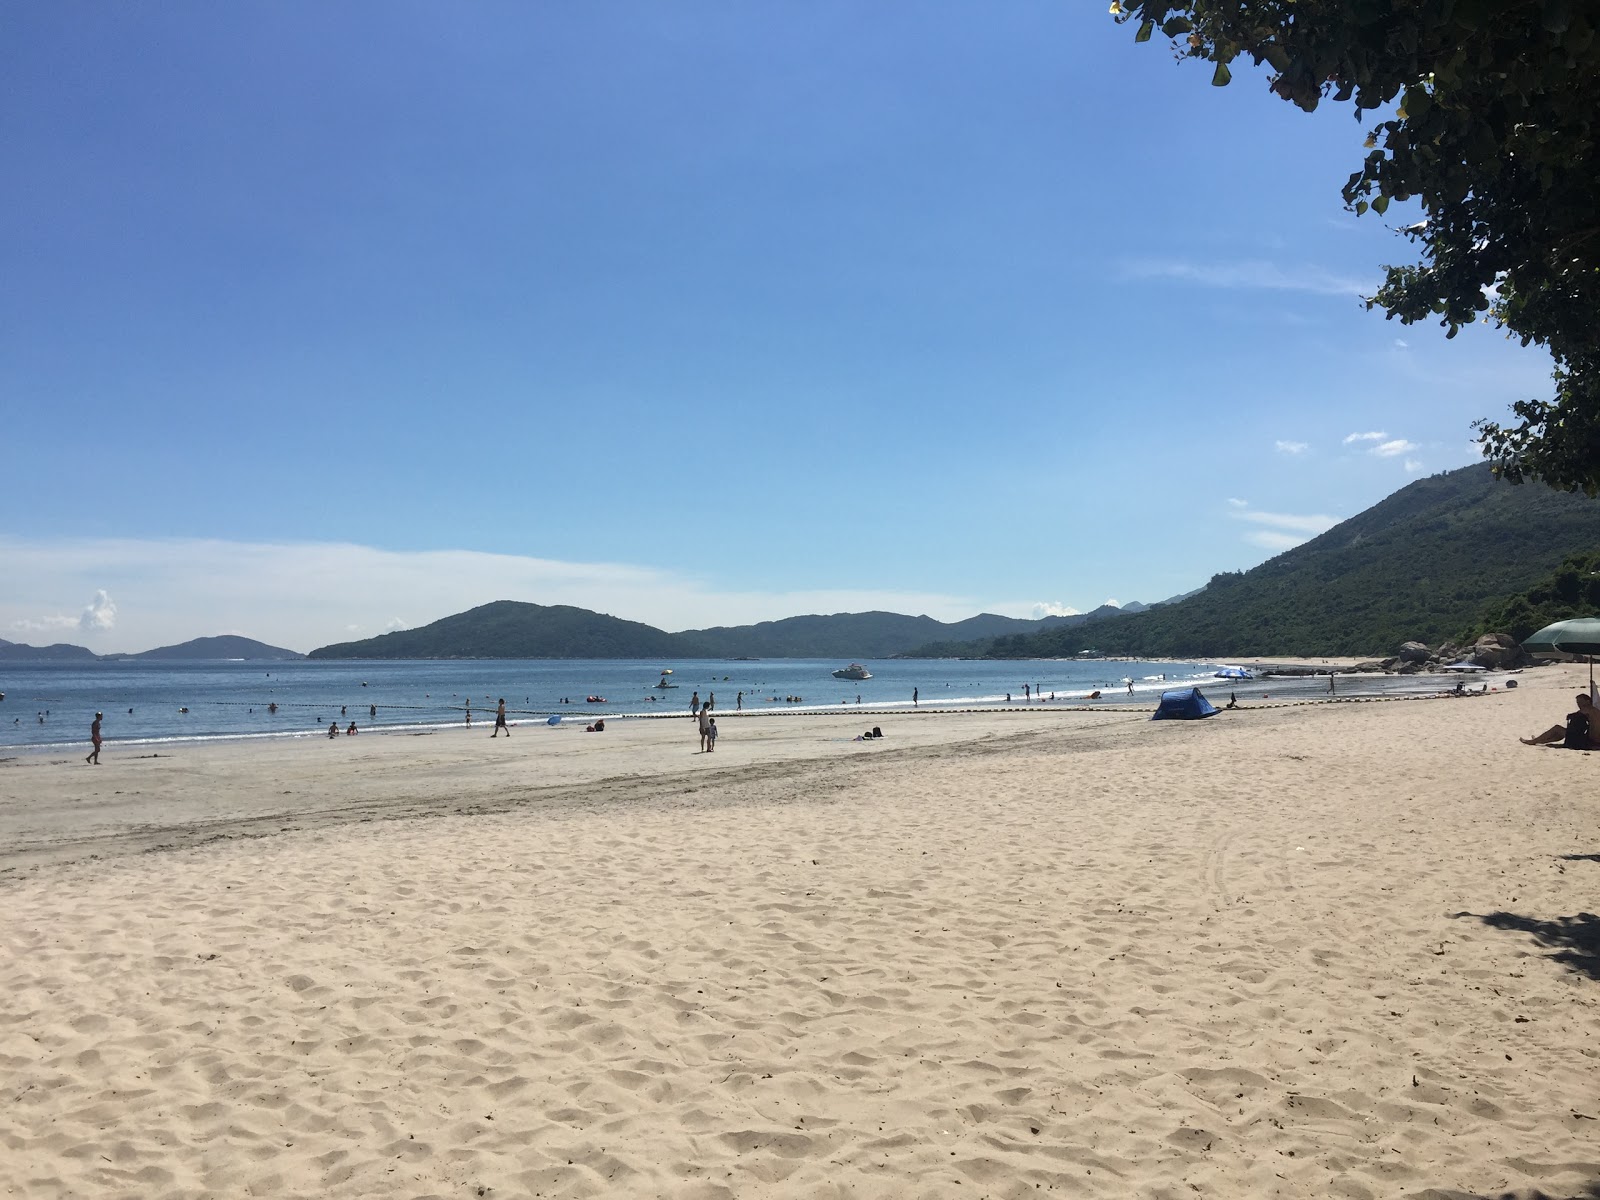 Foto di Lower Cheung Sha Beach ubicato in zona naturale